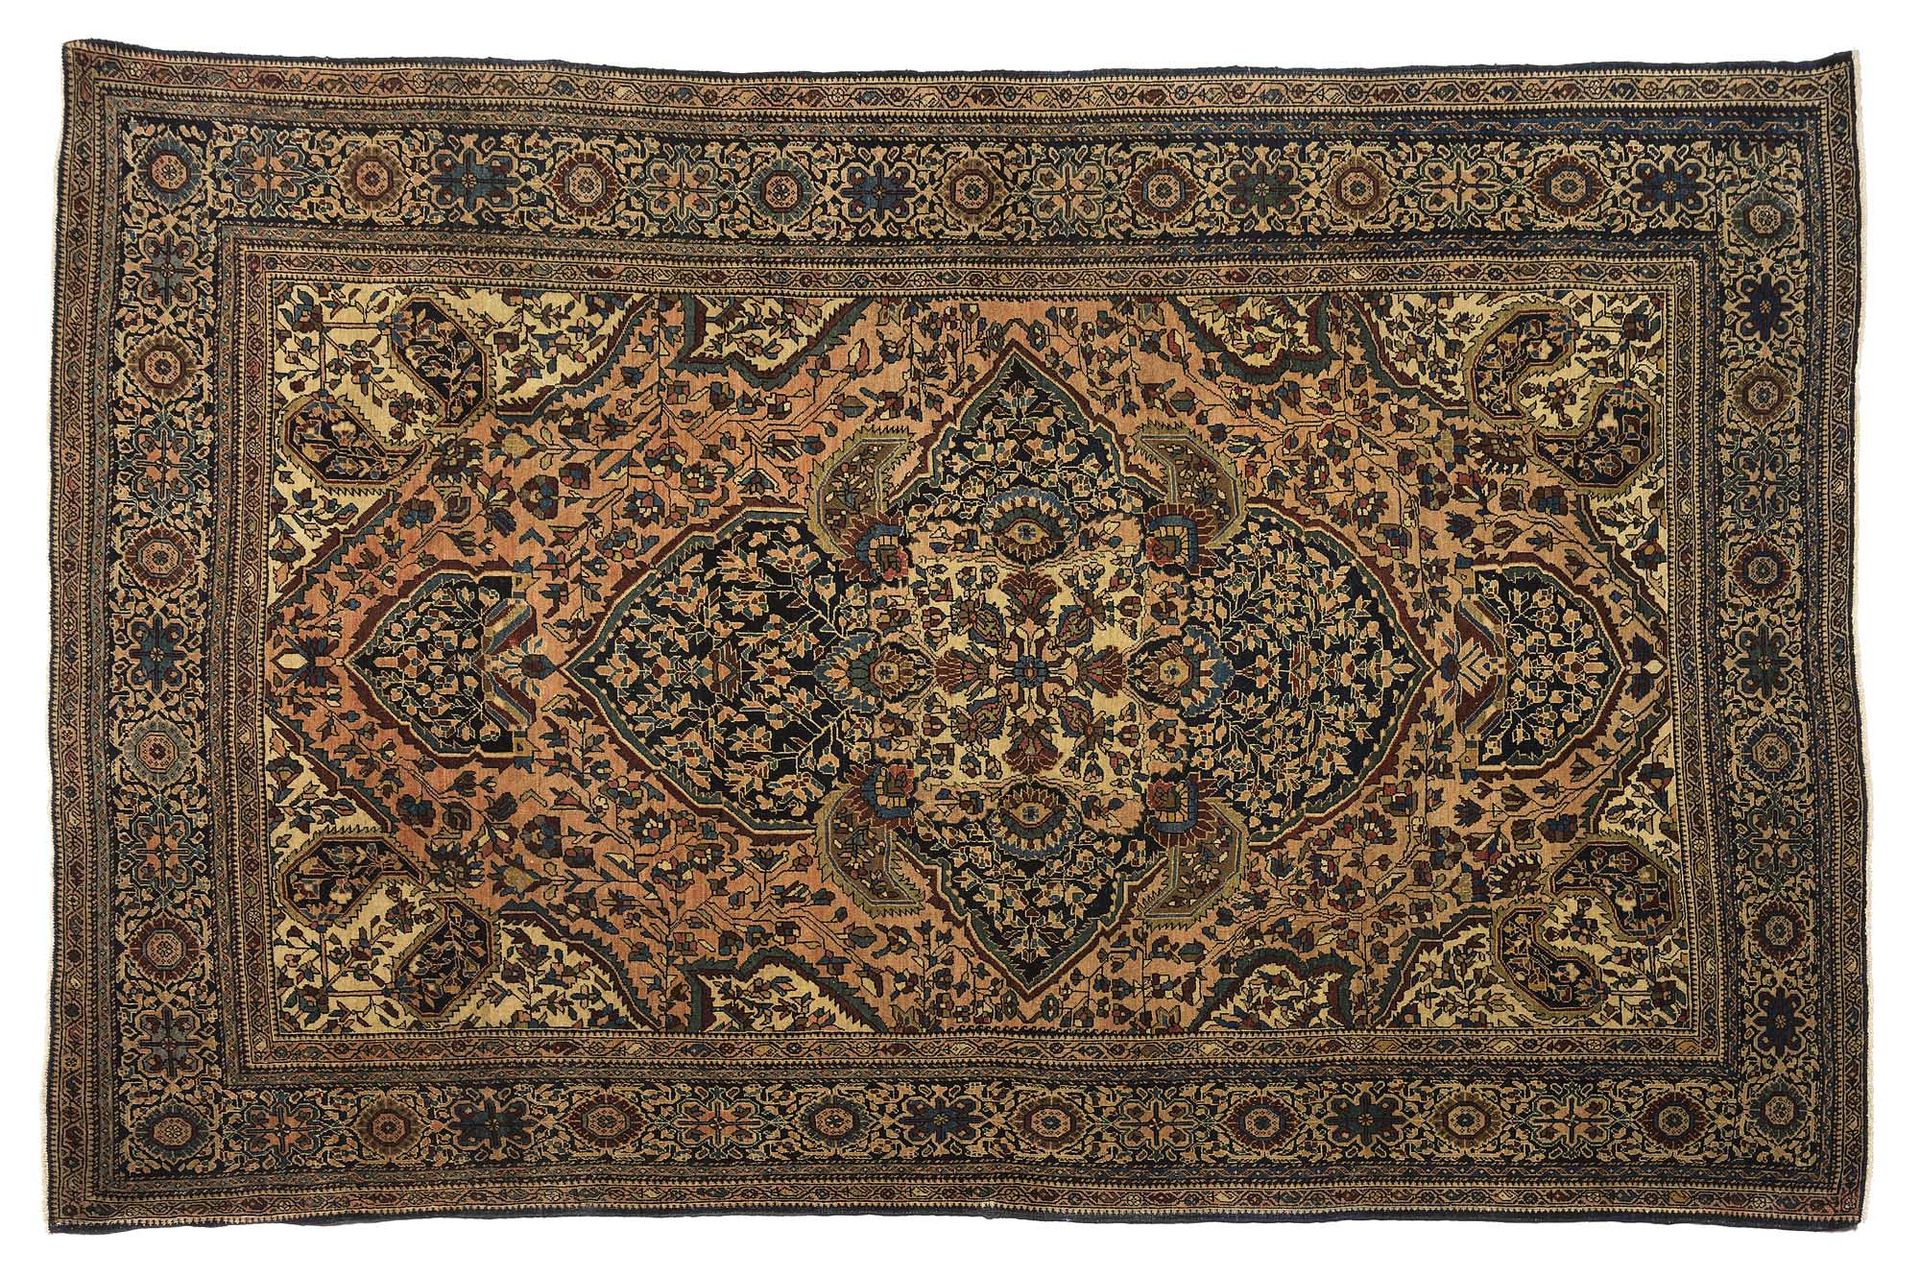 Null SAROUK carpet (Persia), late 19th century

Dimensions : 192 x 121cm

Techni&hellip;